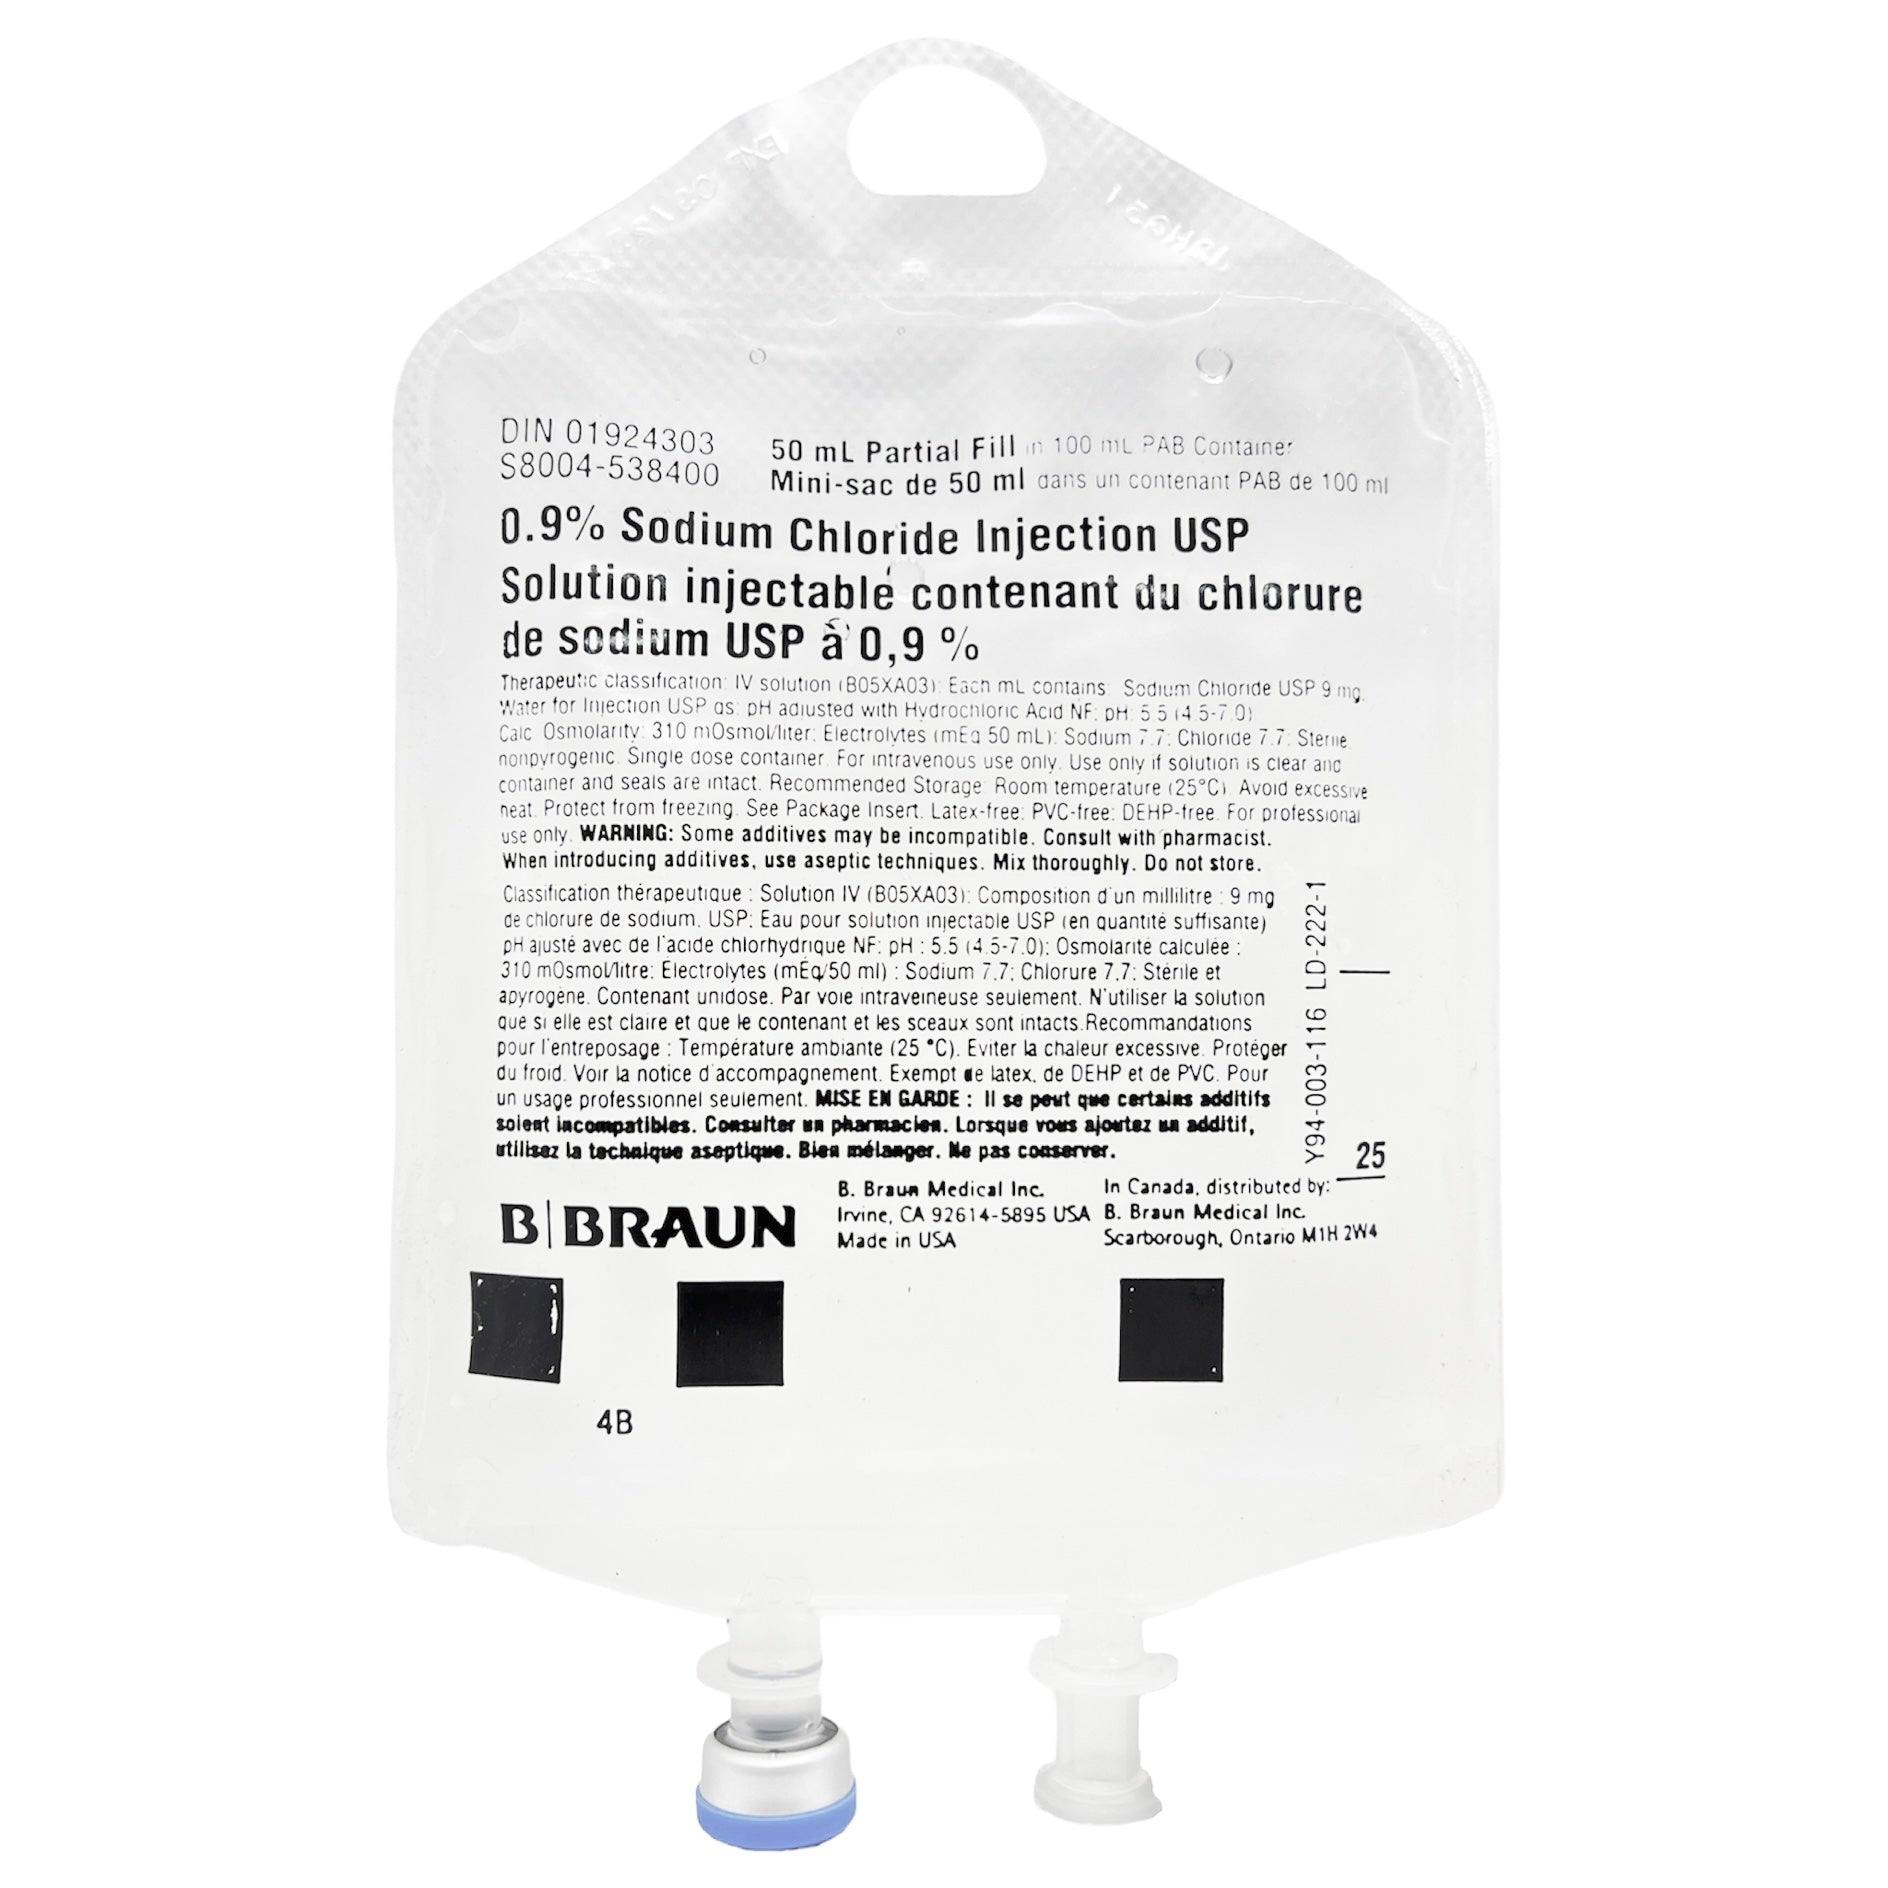 Braun 0.9% Sodium Chloride Injection USP (50mL fill in 100mL PAB)